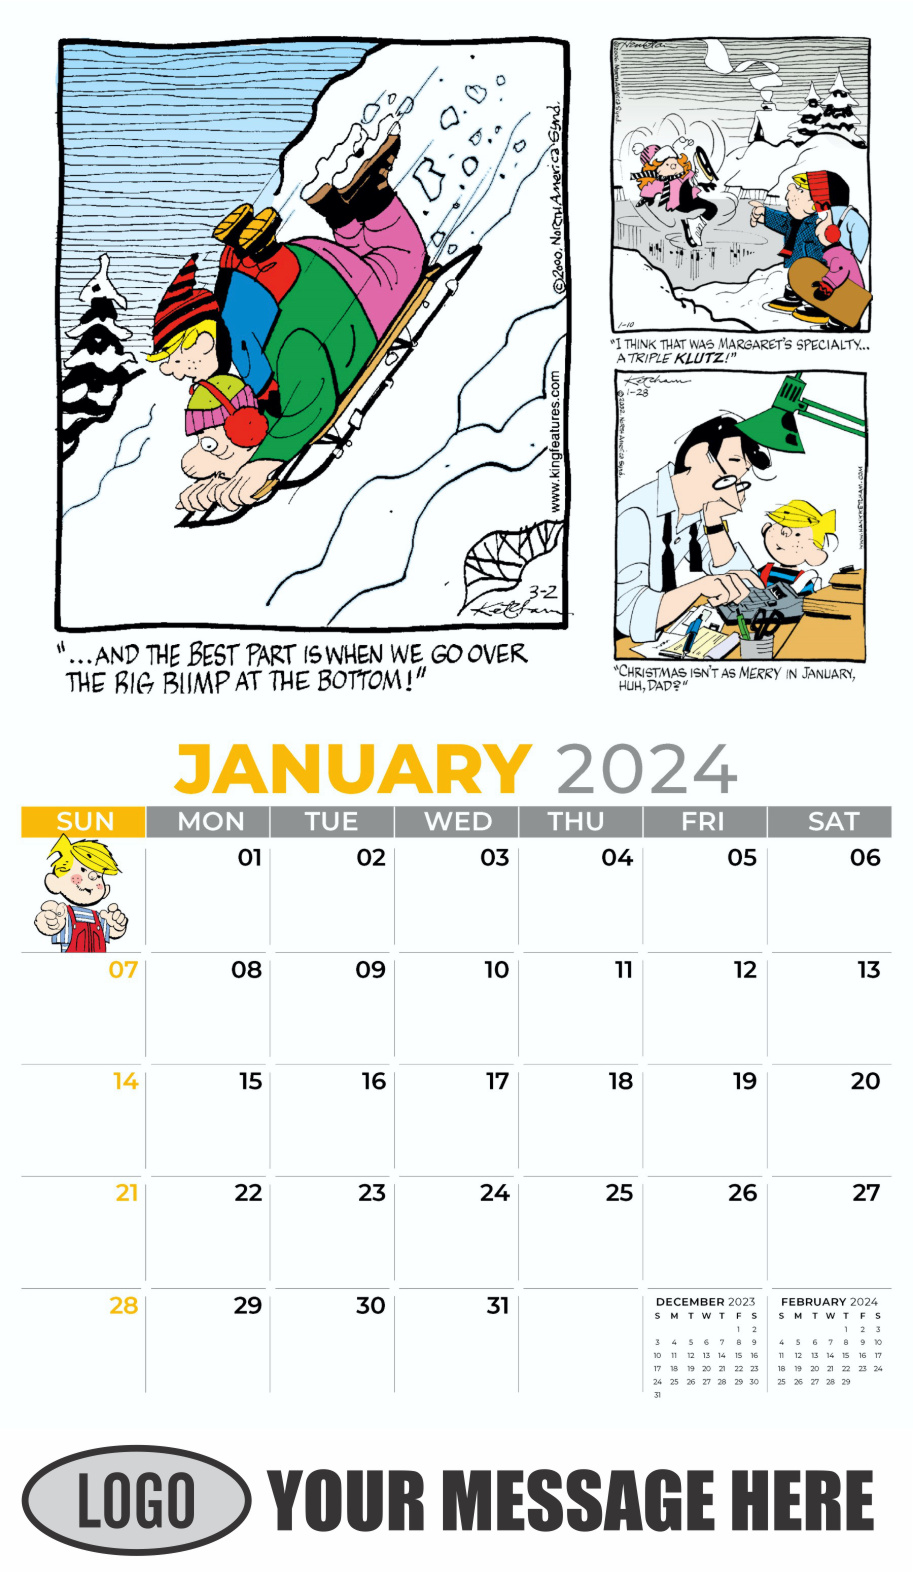 Dennis the Menace 2024 Business Promotional Wall Calendar - January